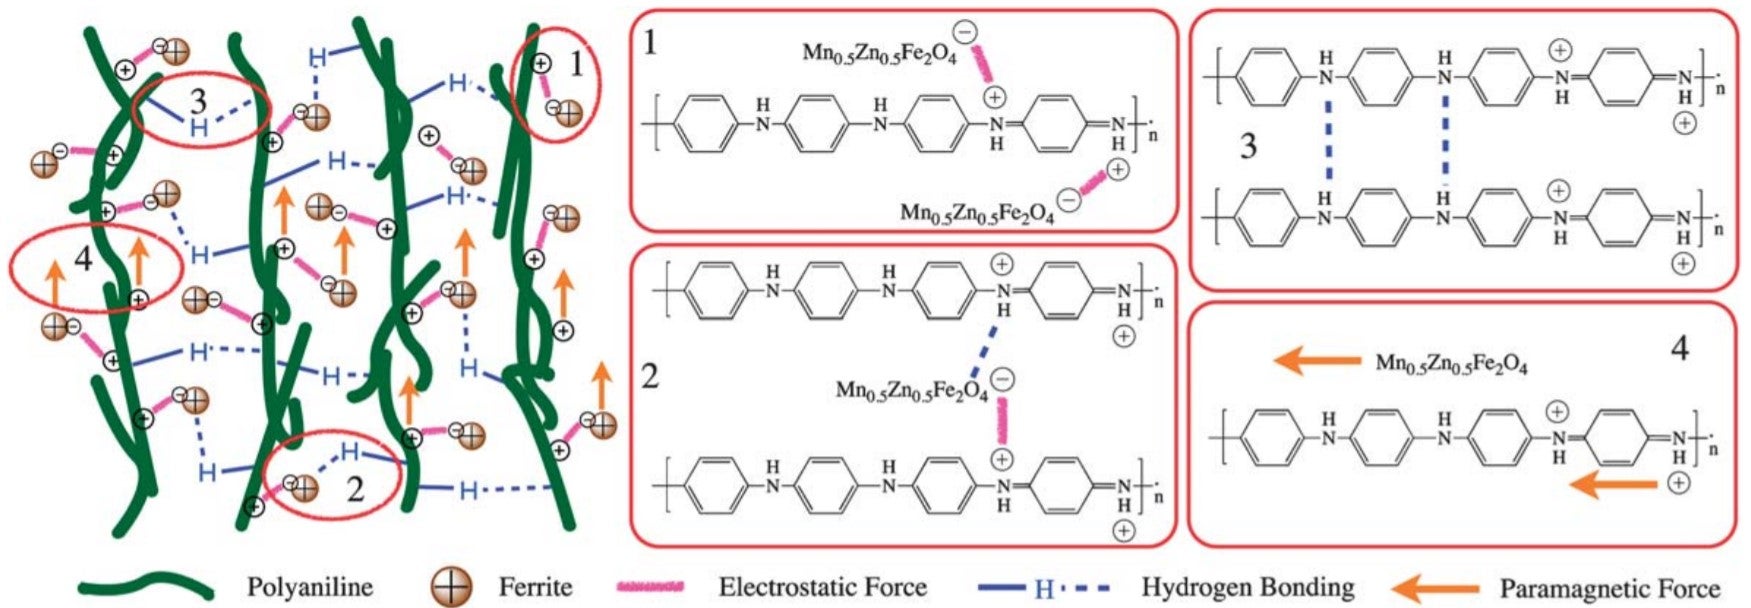 Ferrite-grafted polyaniline nanofibers as electromagnetic shielding materials